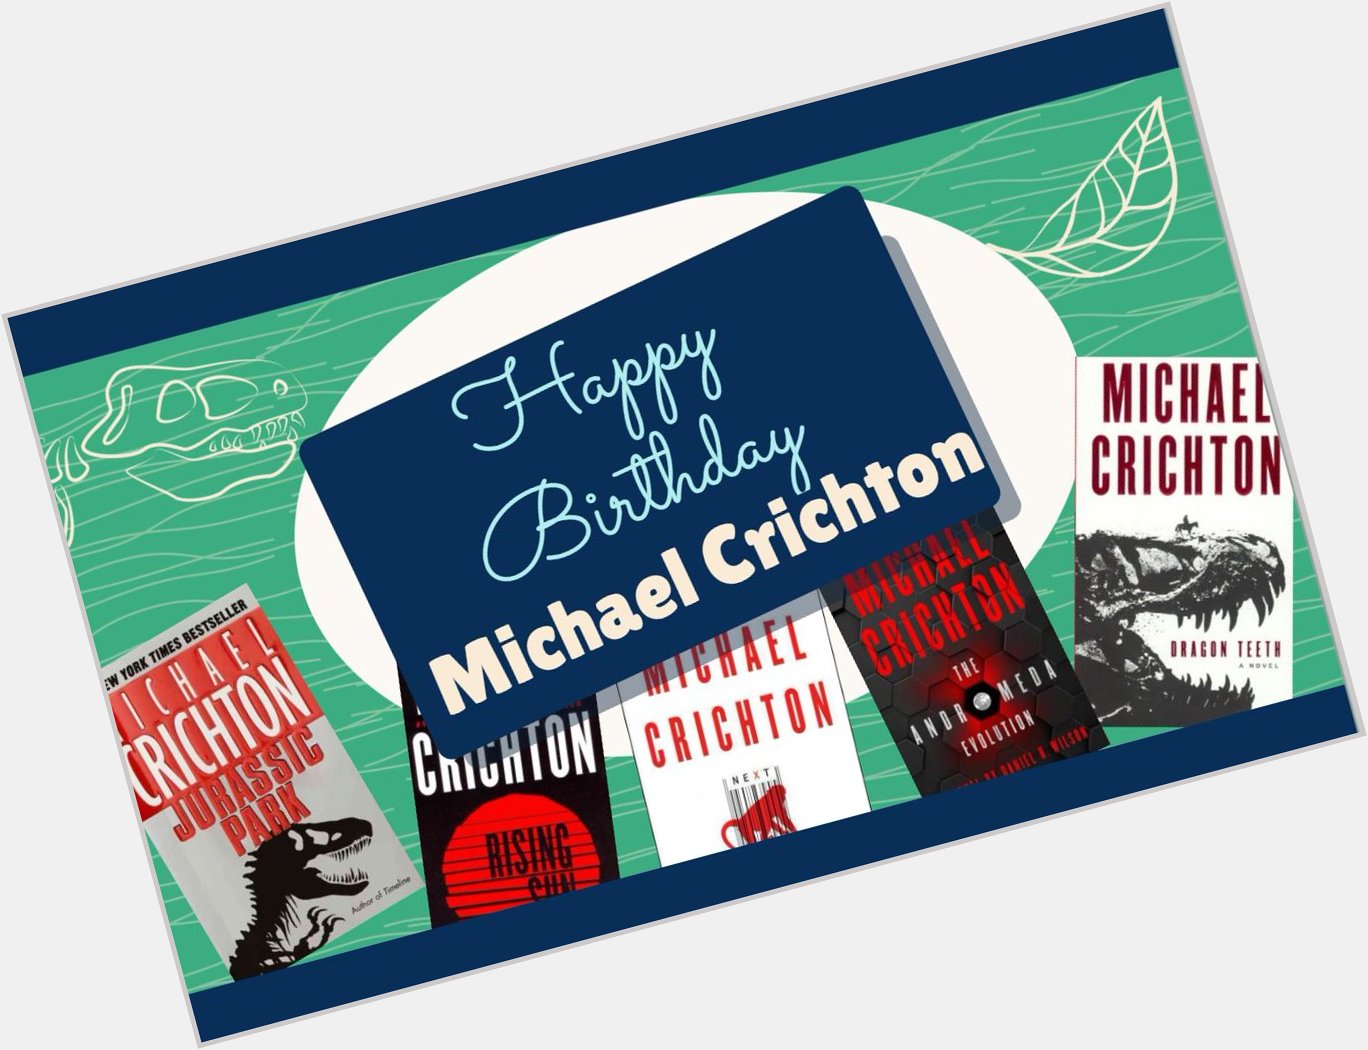  Life will find a way.  Michael Crichton, Jurassic Park

Happy Birthday Michael Crichton! 